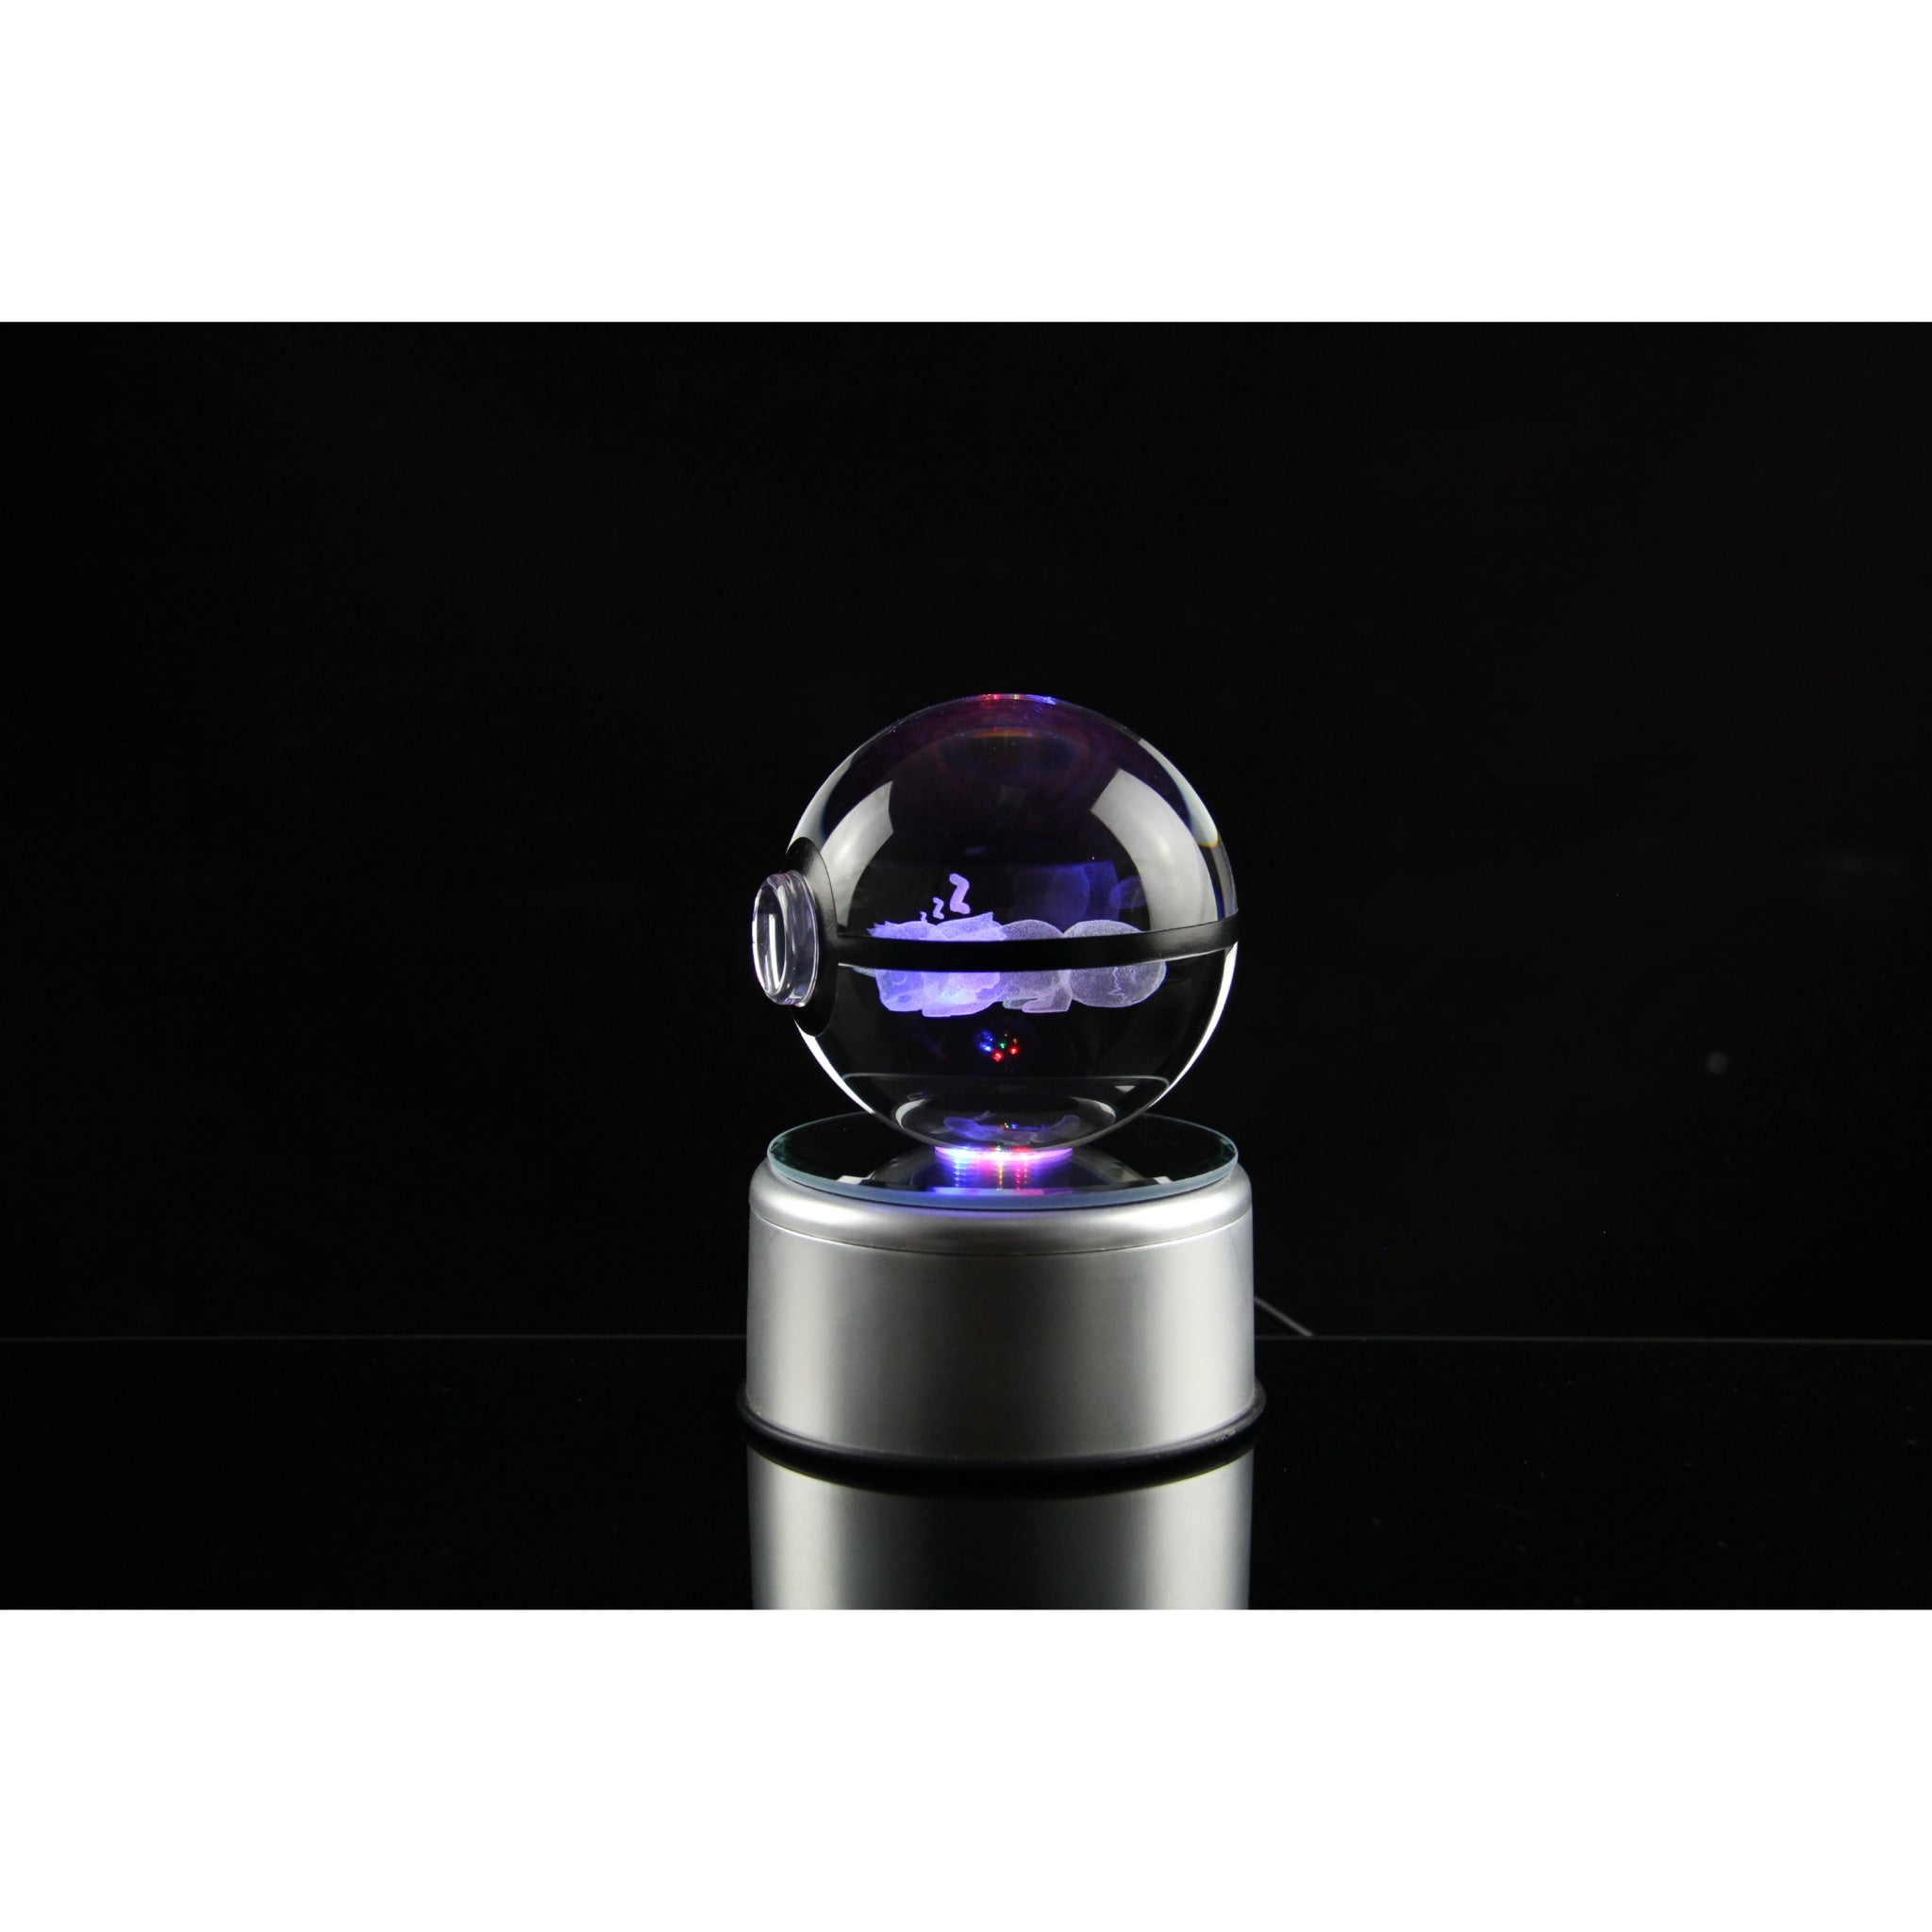 Sleep Eevee Pokemon Glass Crystal Pokeball 51 with Light-Up LED Base Ornament 80mm XL Size